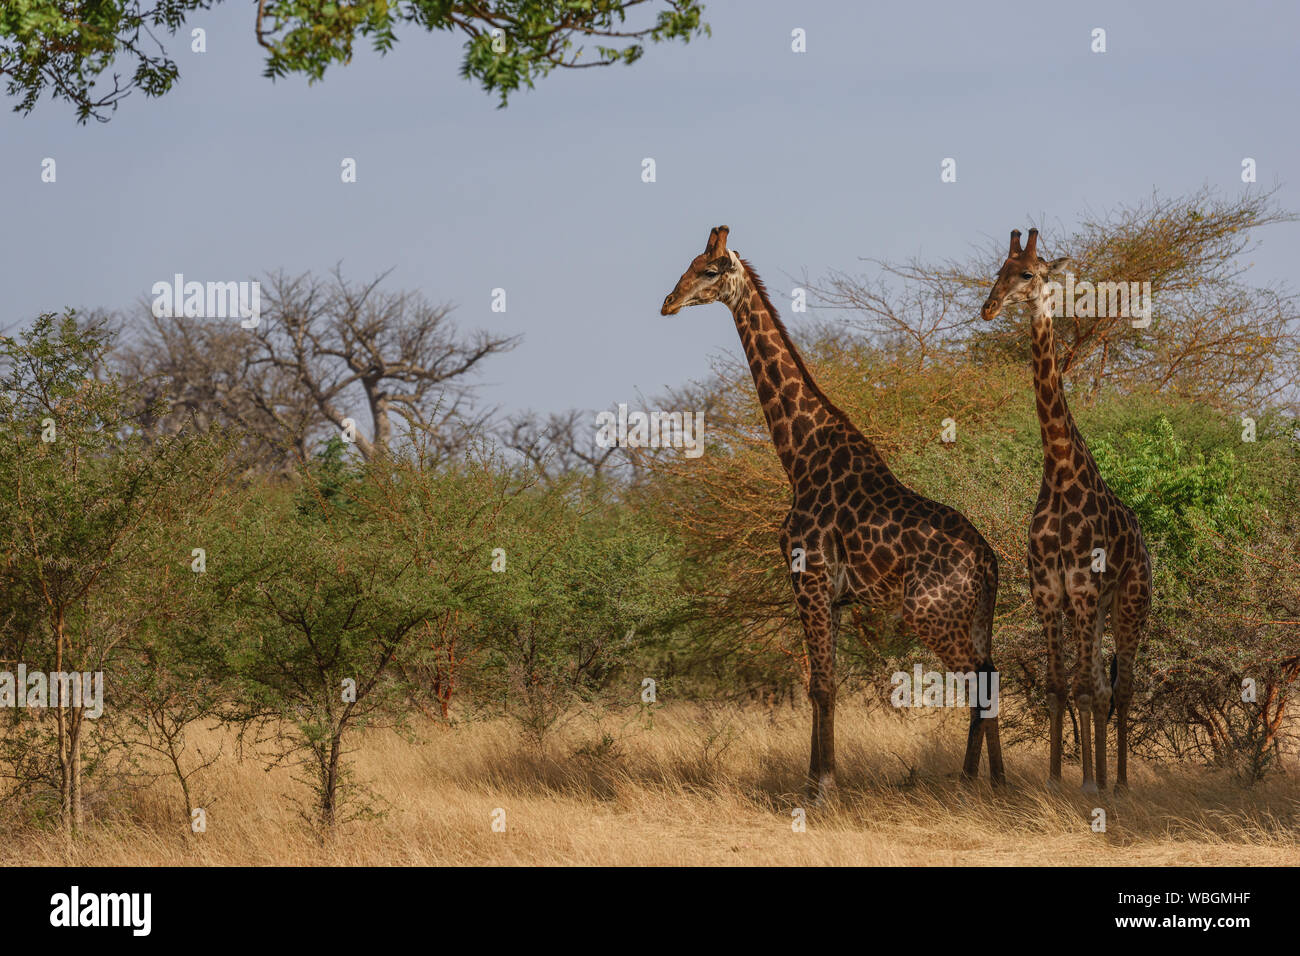 - Girafe Giraffa giraffa, safari en Afrique de l'Ouest (Sénégal, Mignon membre du big five africains. Banque D'Images